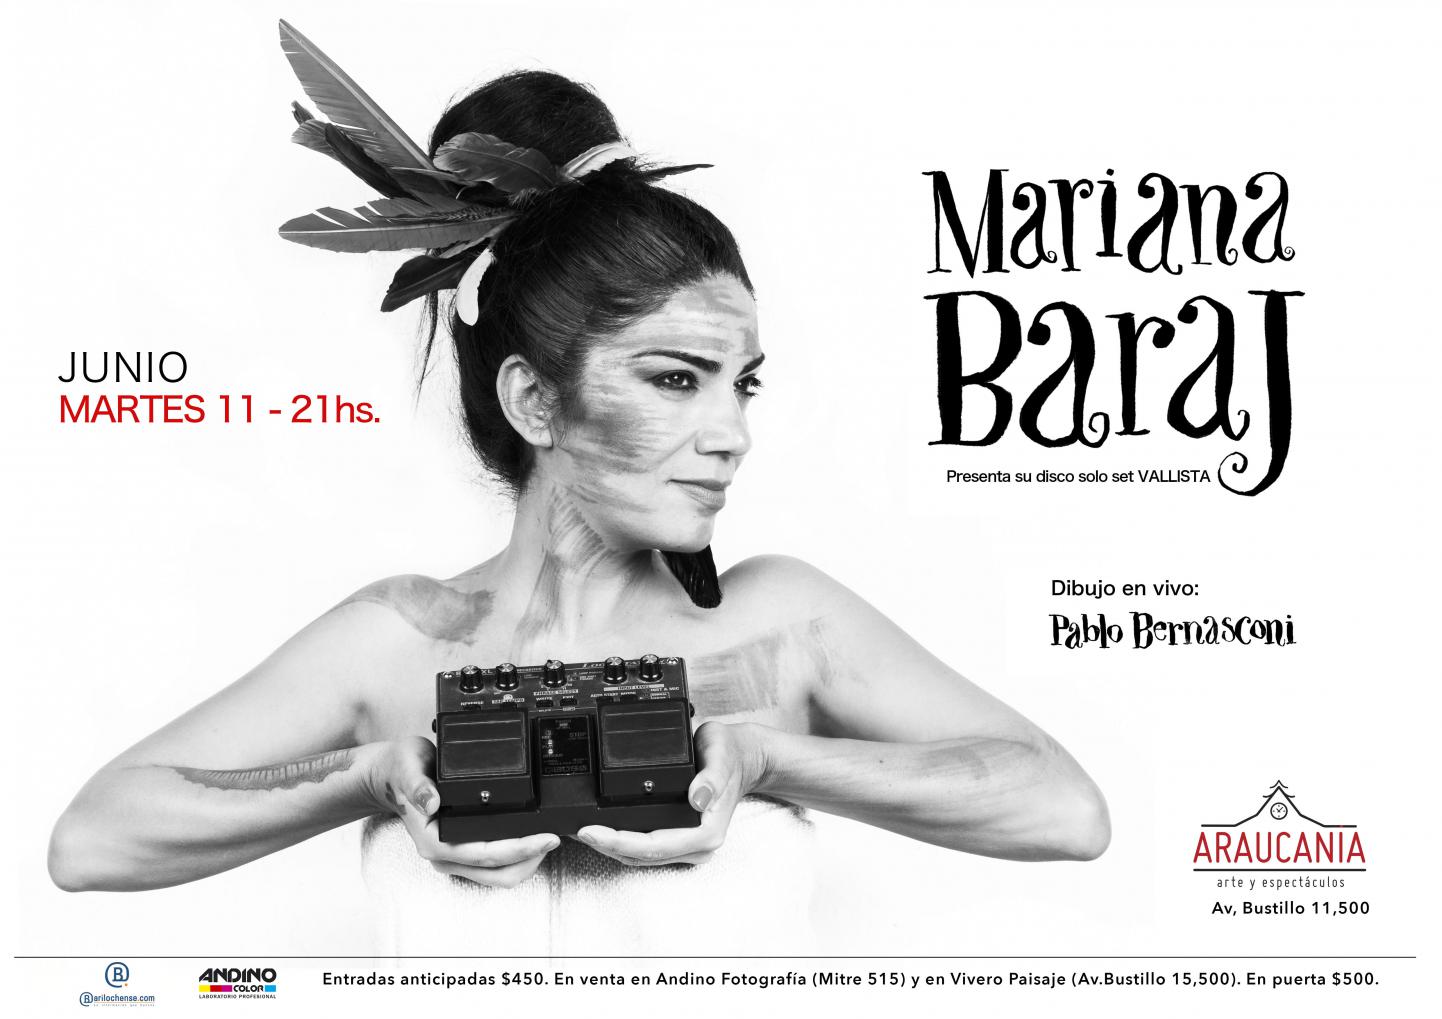 Mariana Baraj presenta su disco solo set VALLISTA con dibujo en vivo de Pablo Bernasconi